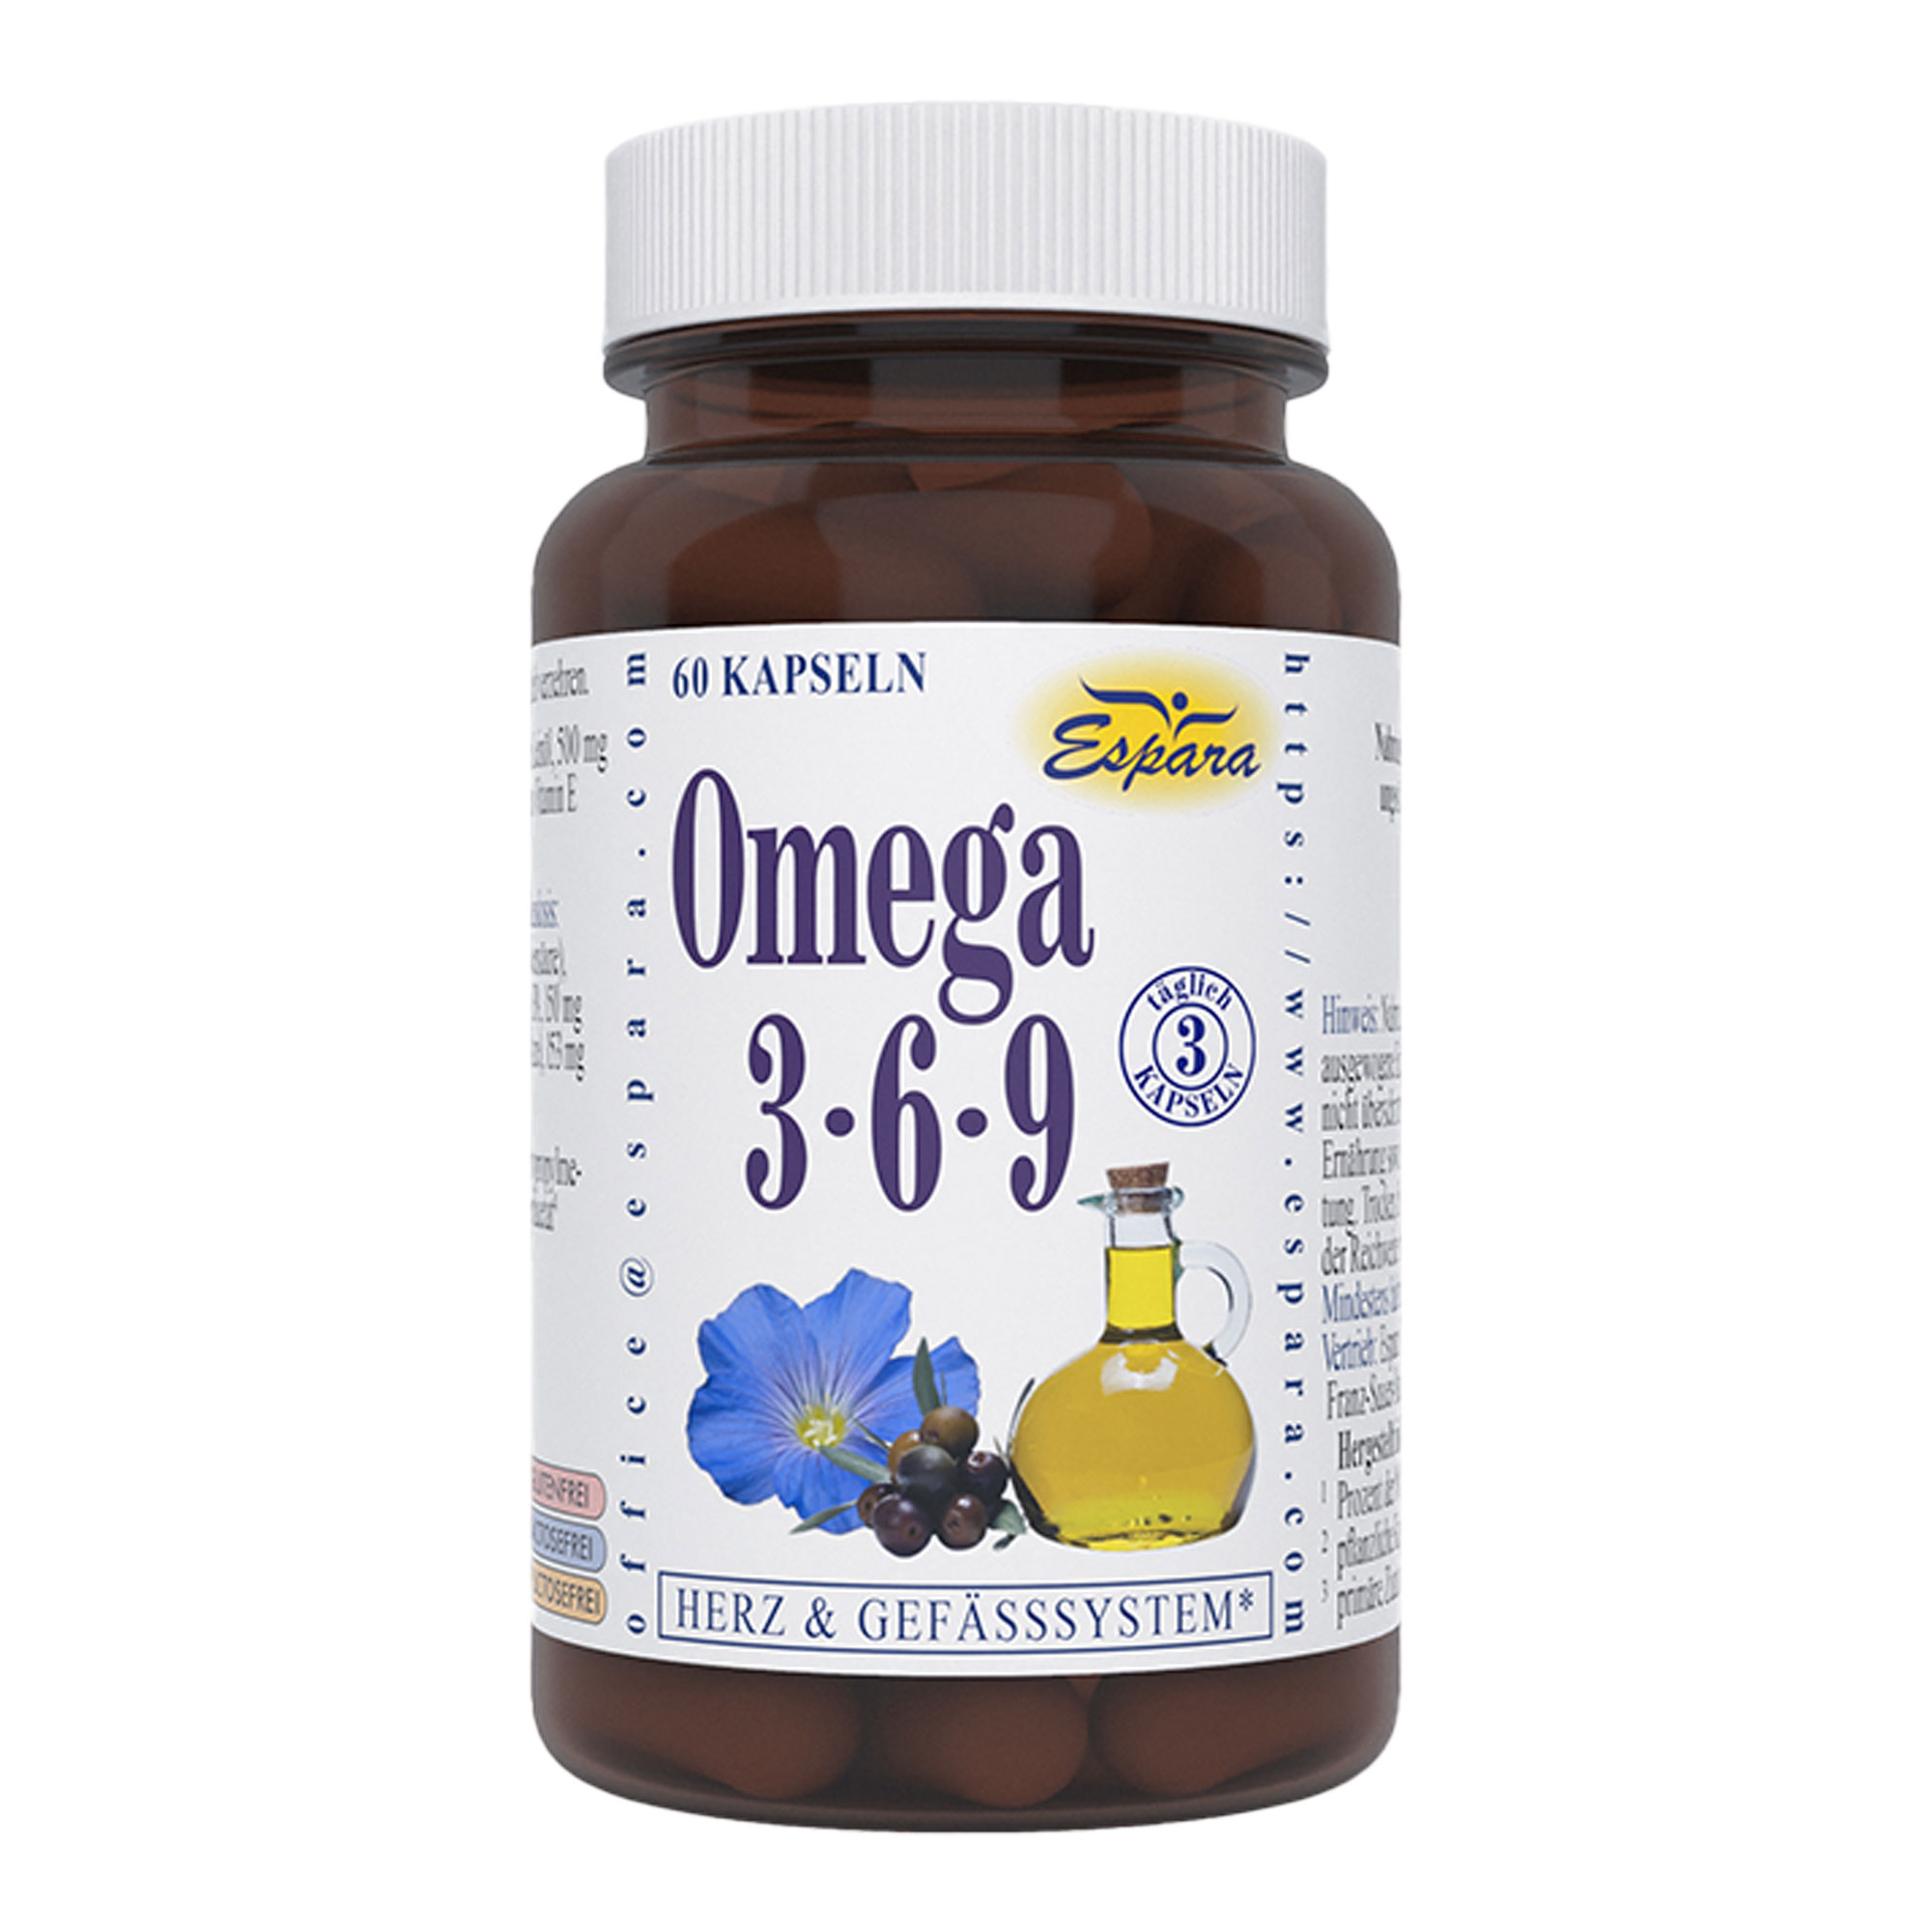 Nahrungsergänzungsmittel mit Omega-3-6-9-Fettsäuren.